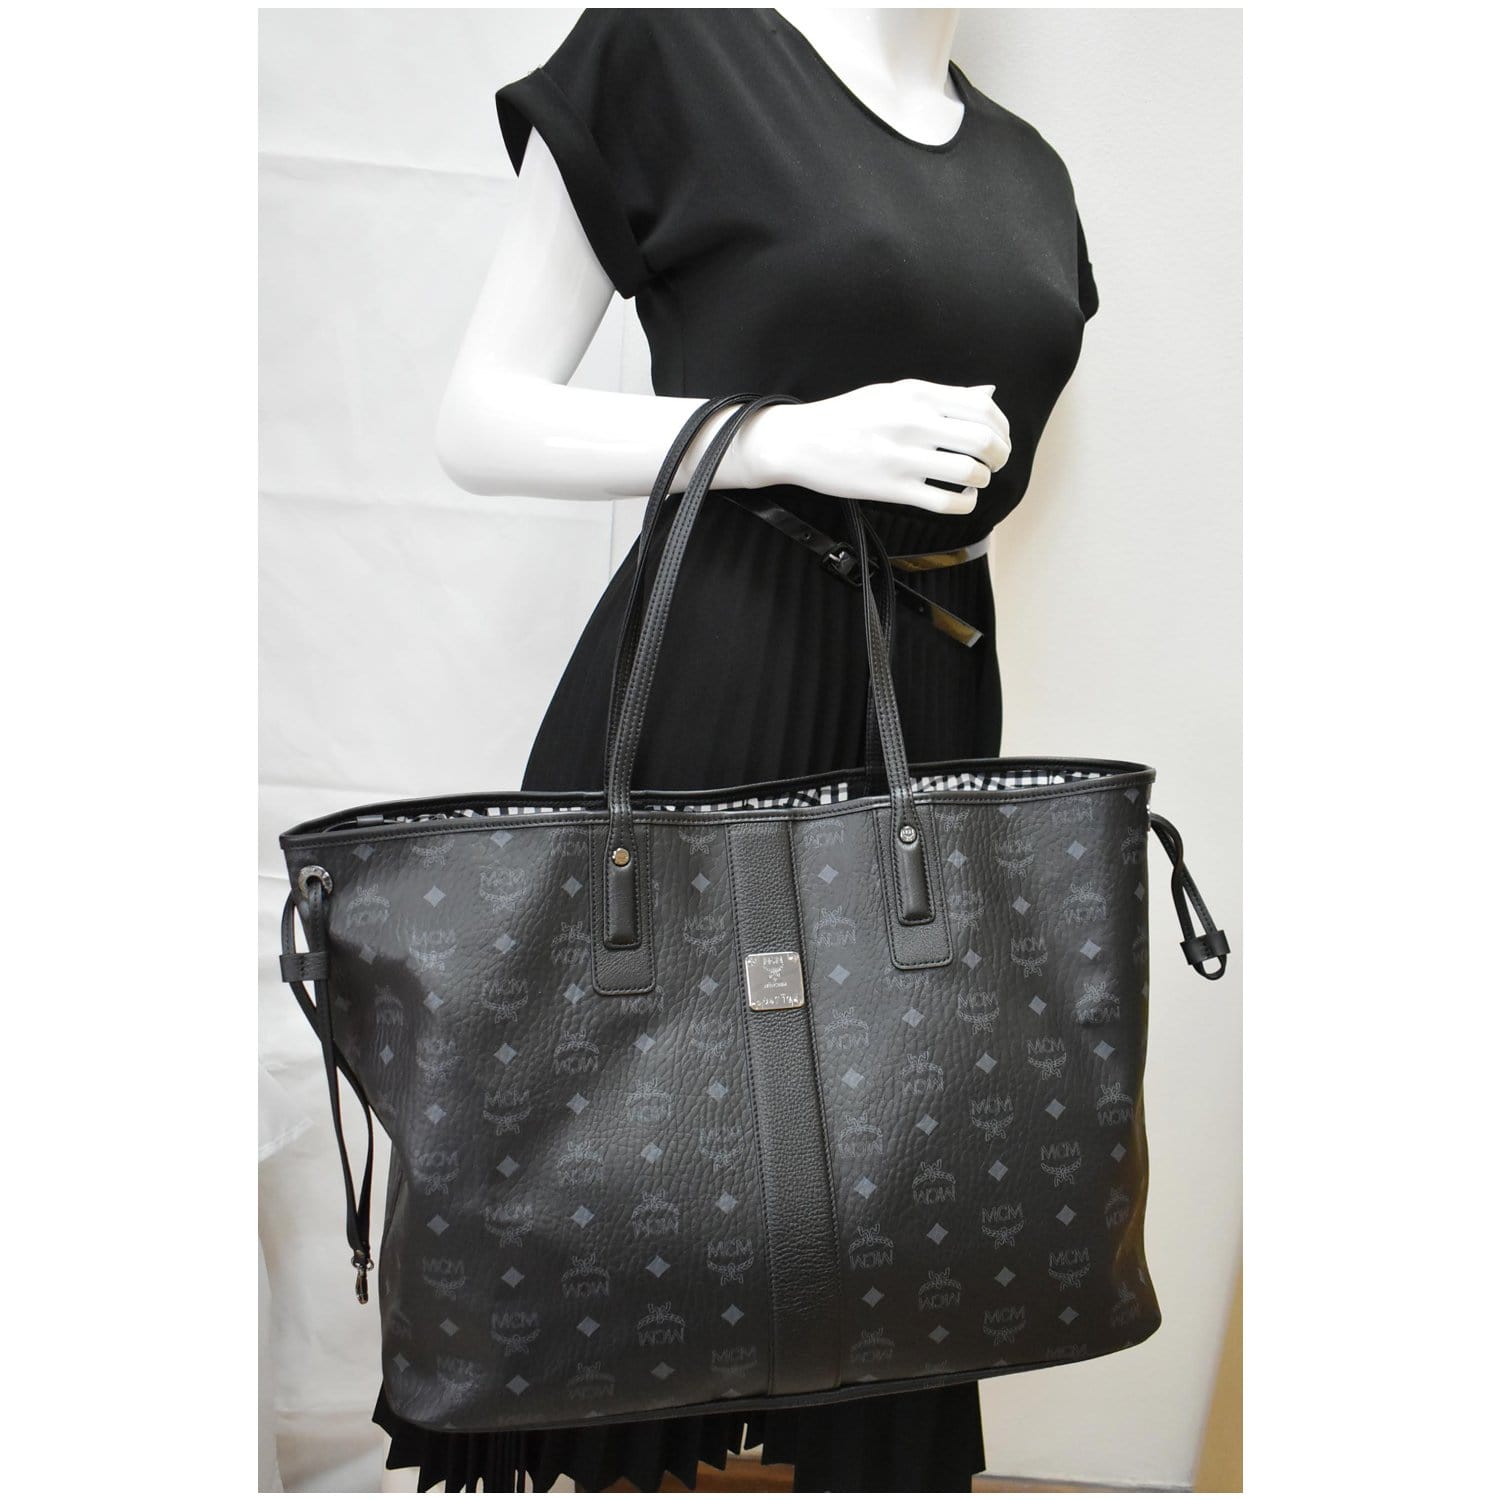 MCM: tote bags for woman - Black  Mcm tote bags MWTDABO17 online